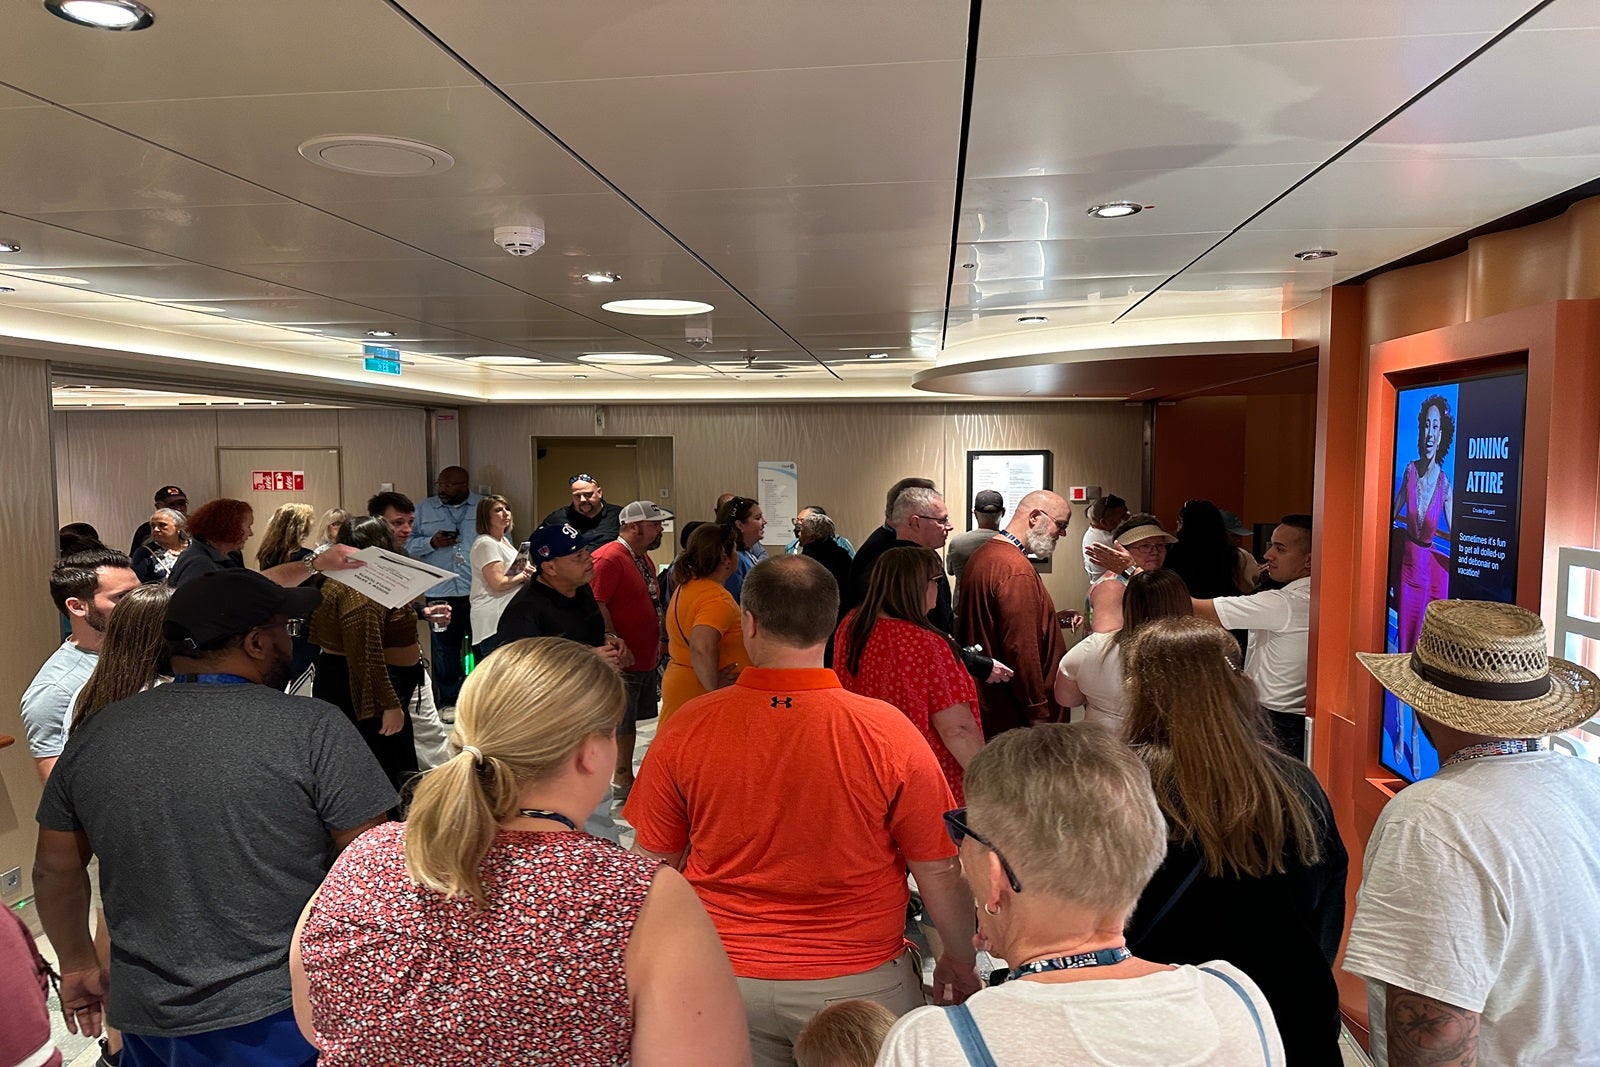 A crowd gathered in a cruise ship corridor